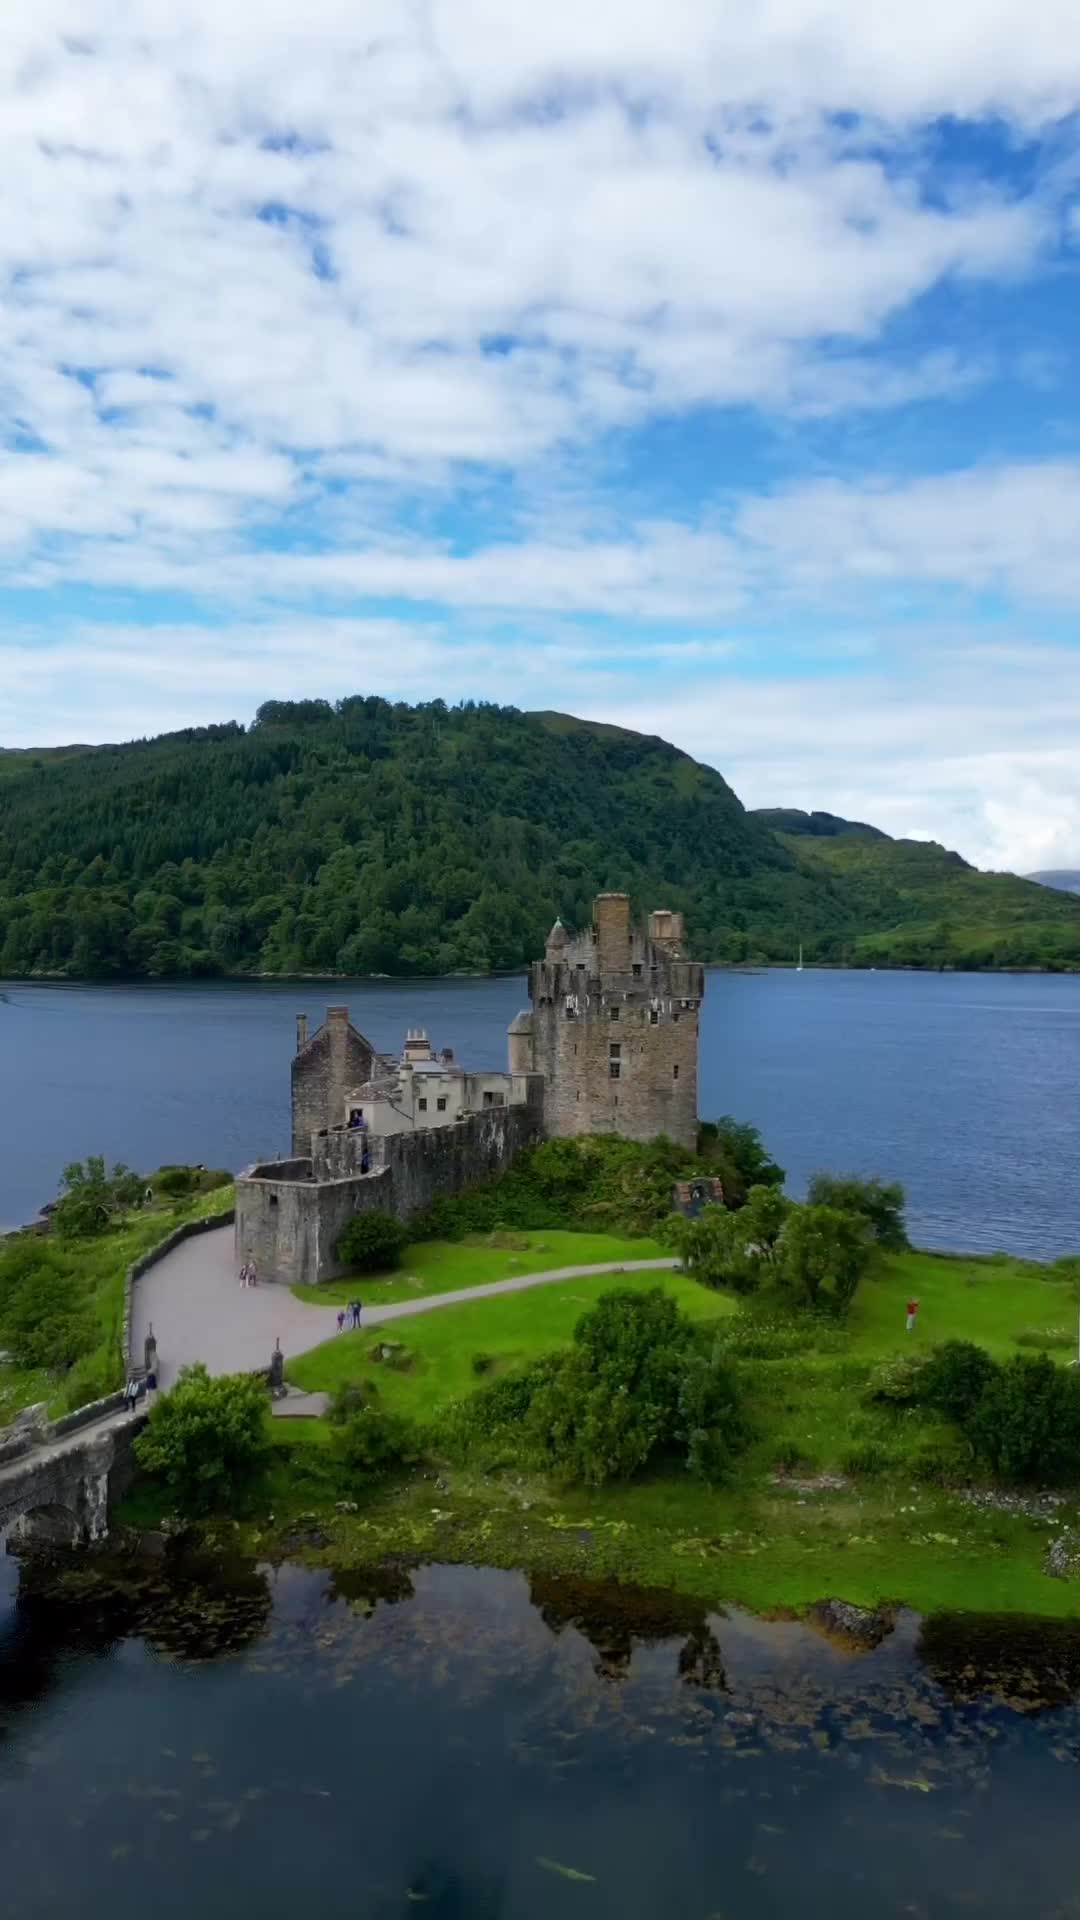 Explore Scotland's Eilean Donan Castle This Summer